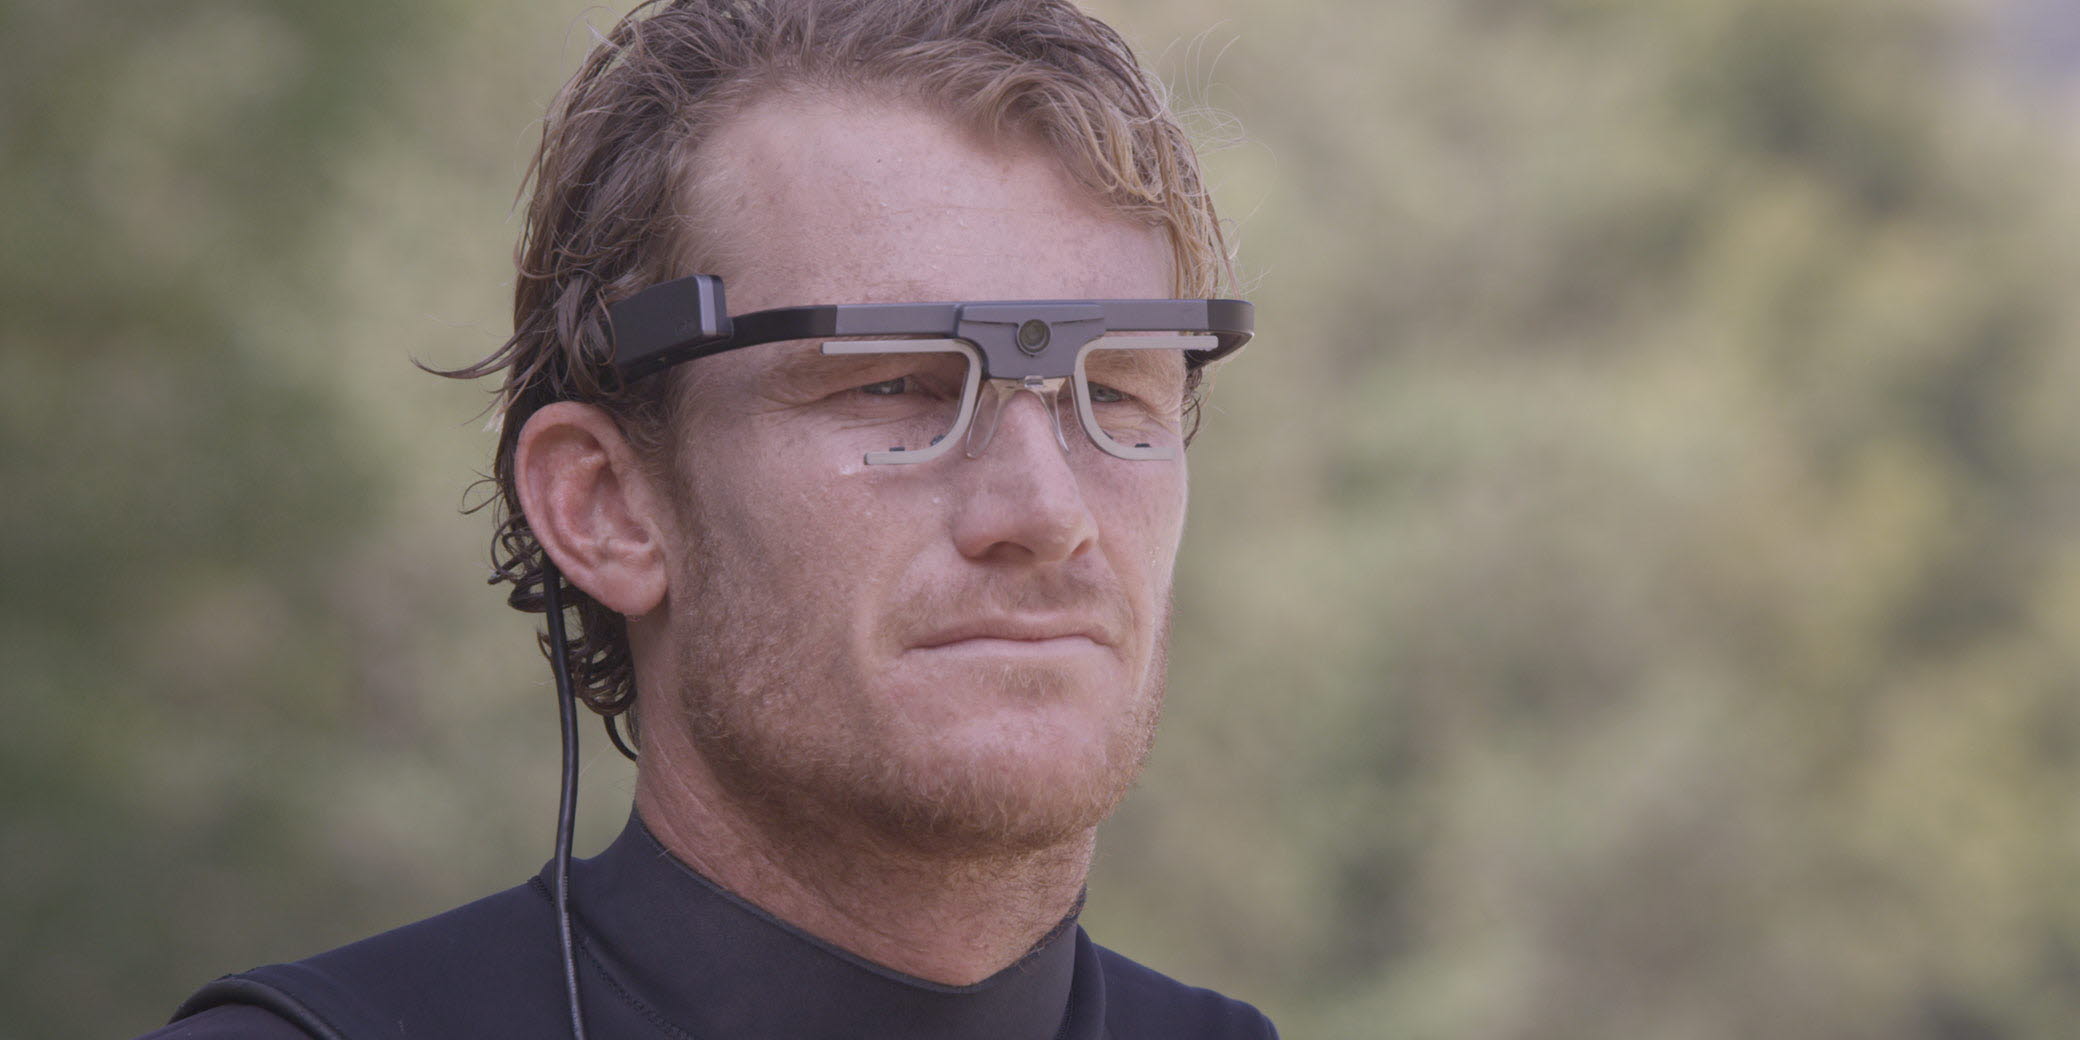 Bede Durbidge, professional surfer wearing Tobii Pro Glasses 2 eye tracker.